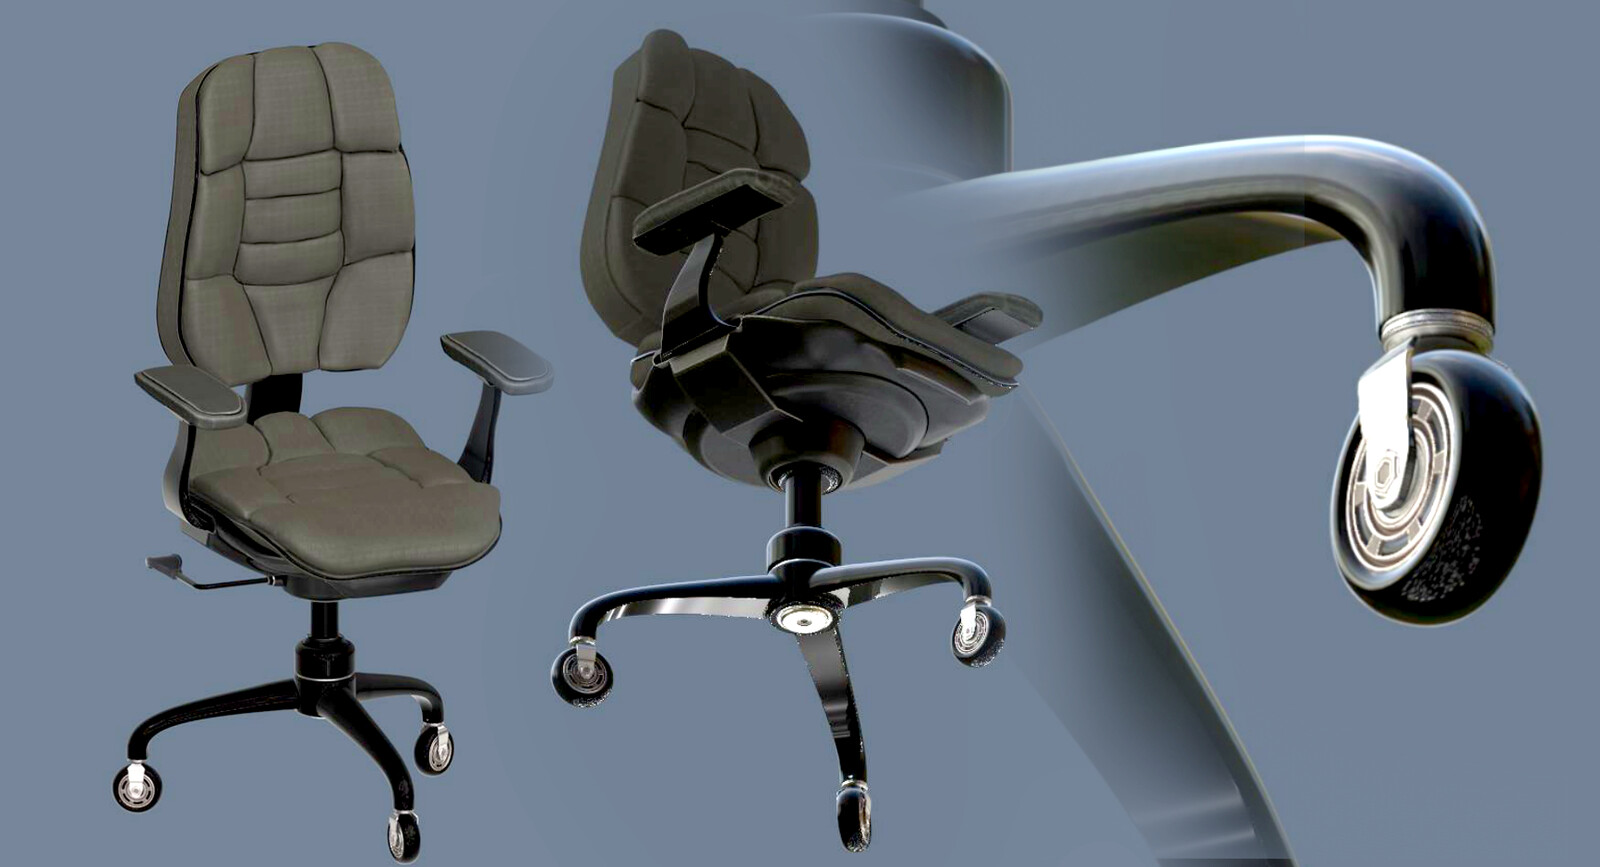 Chair mockup / concept art.